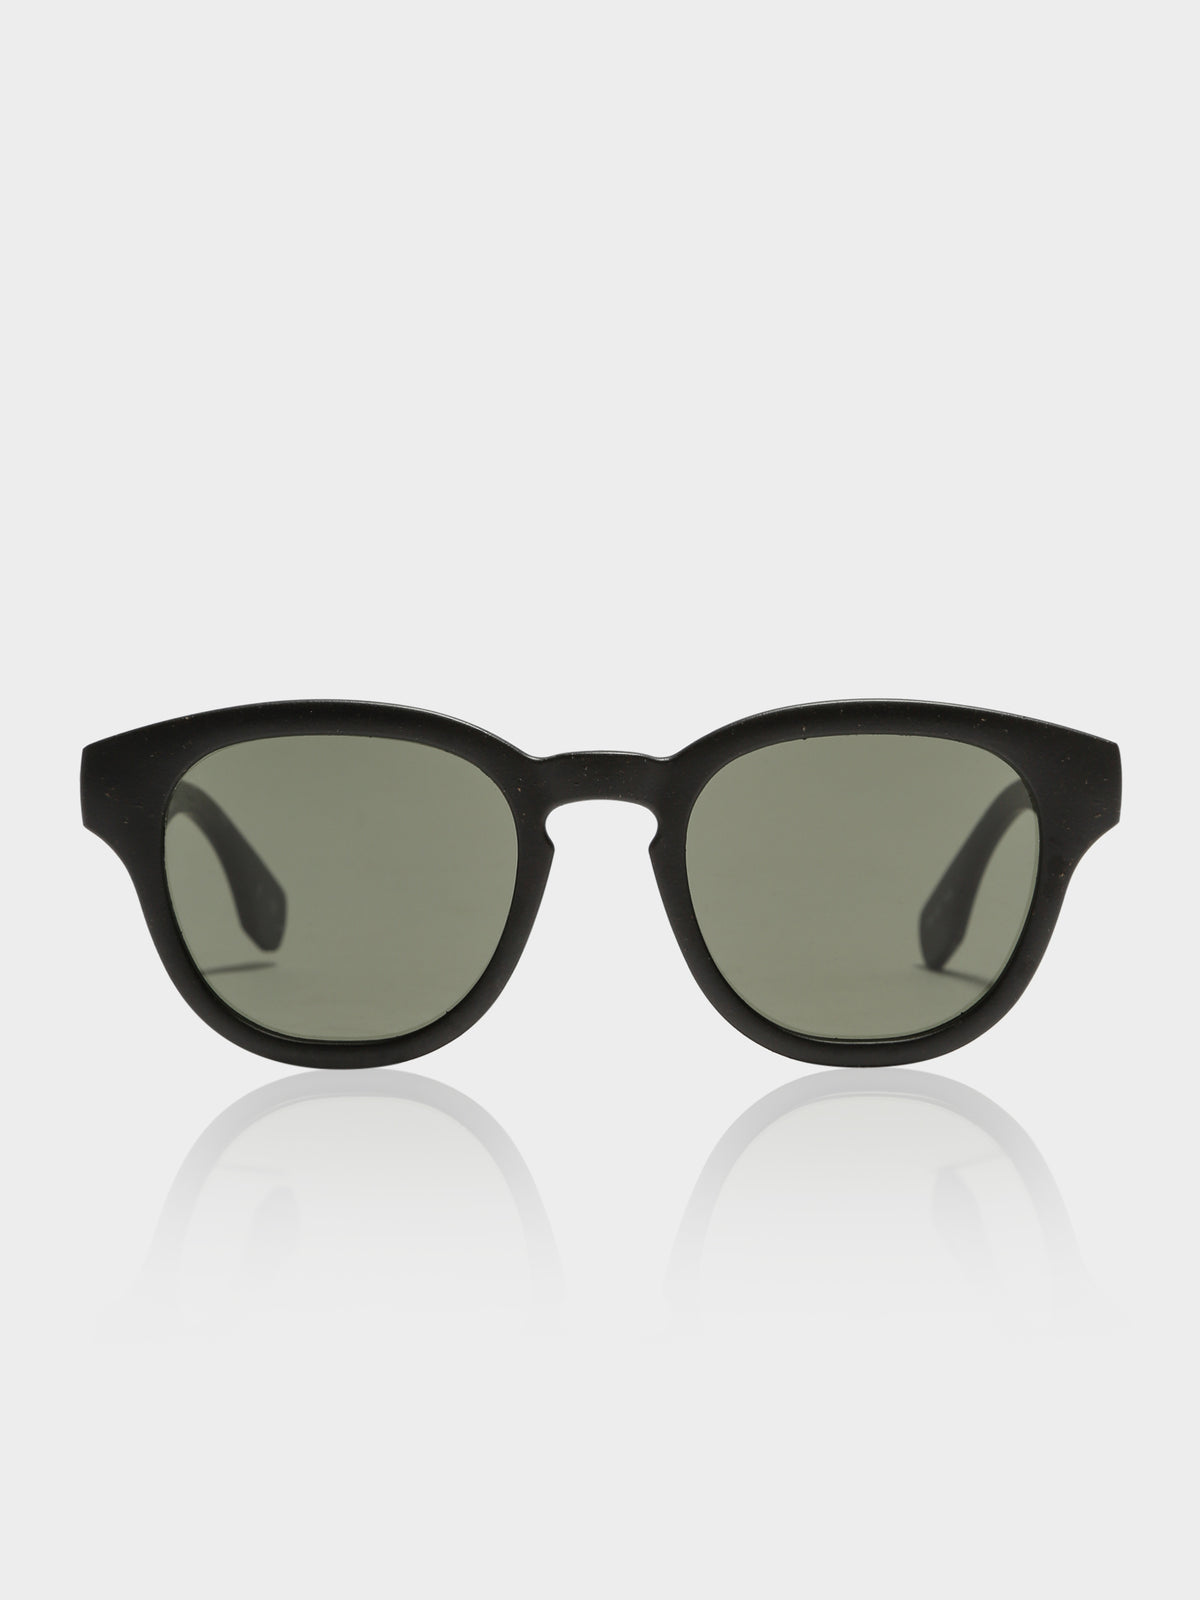 Grass Band Sunglasses in Black